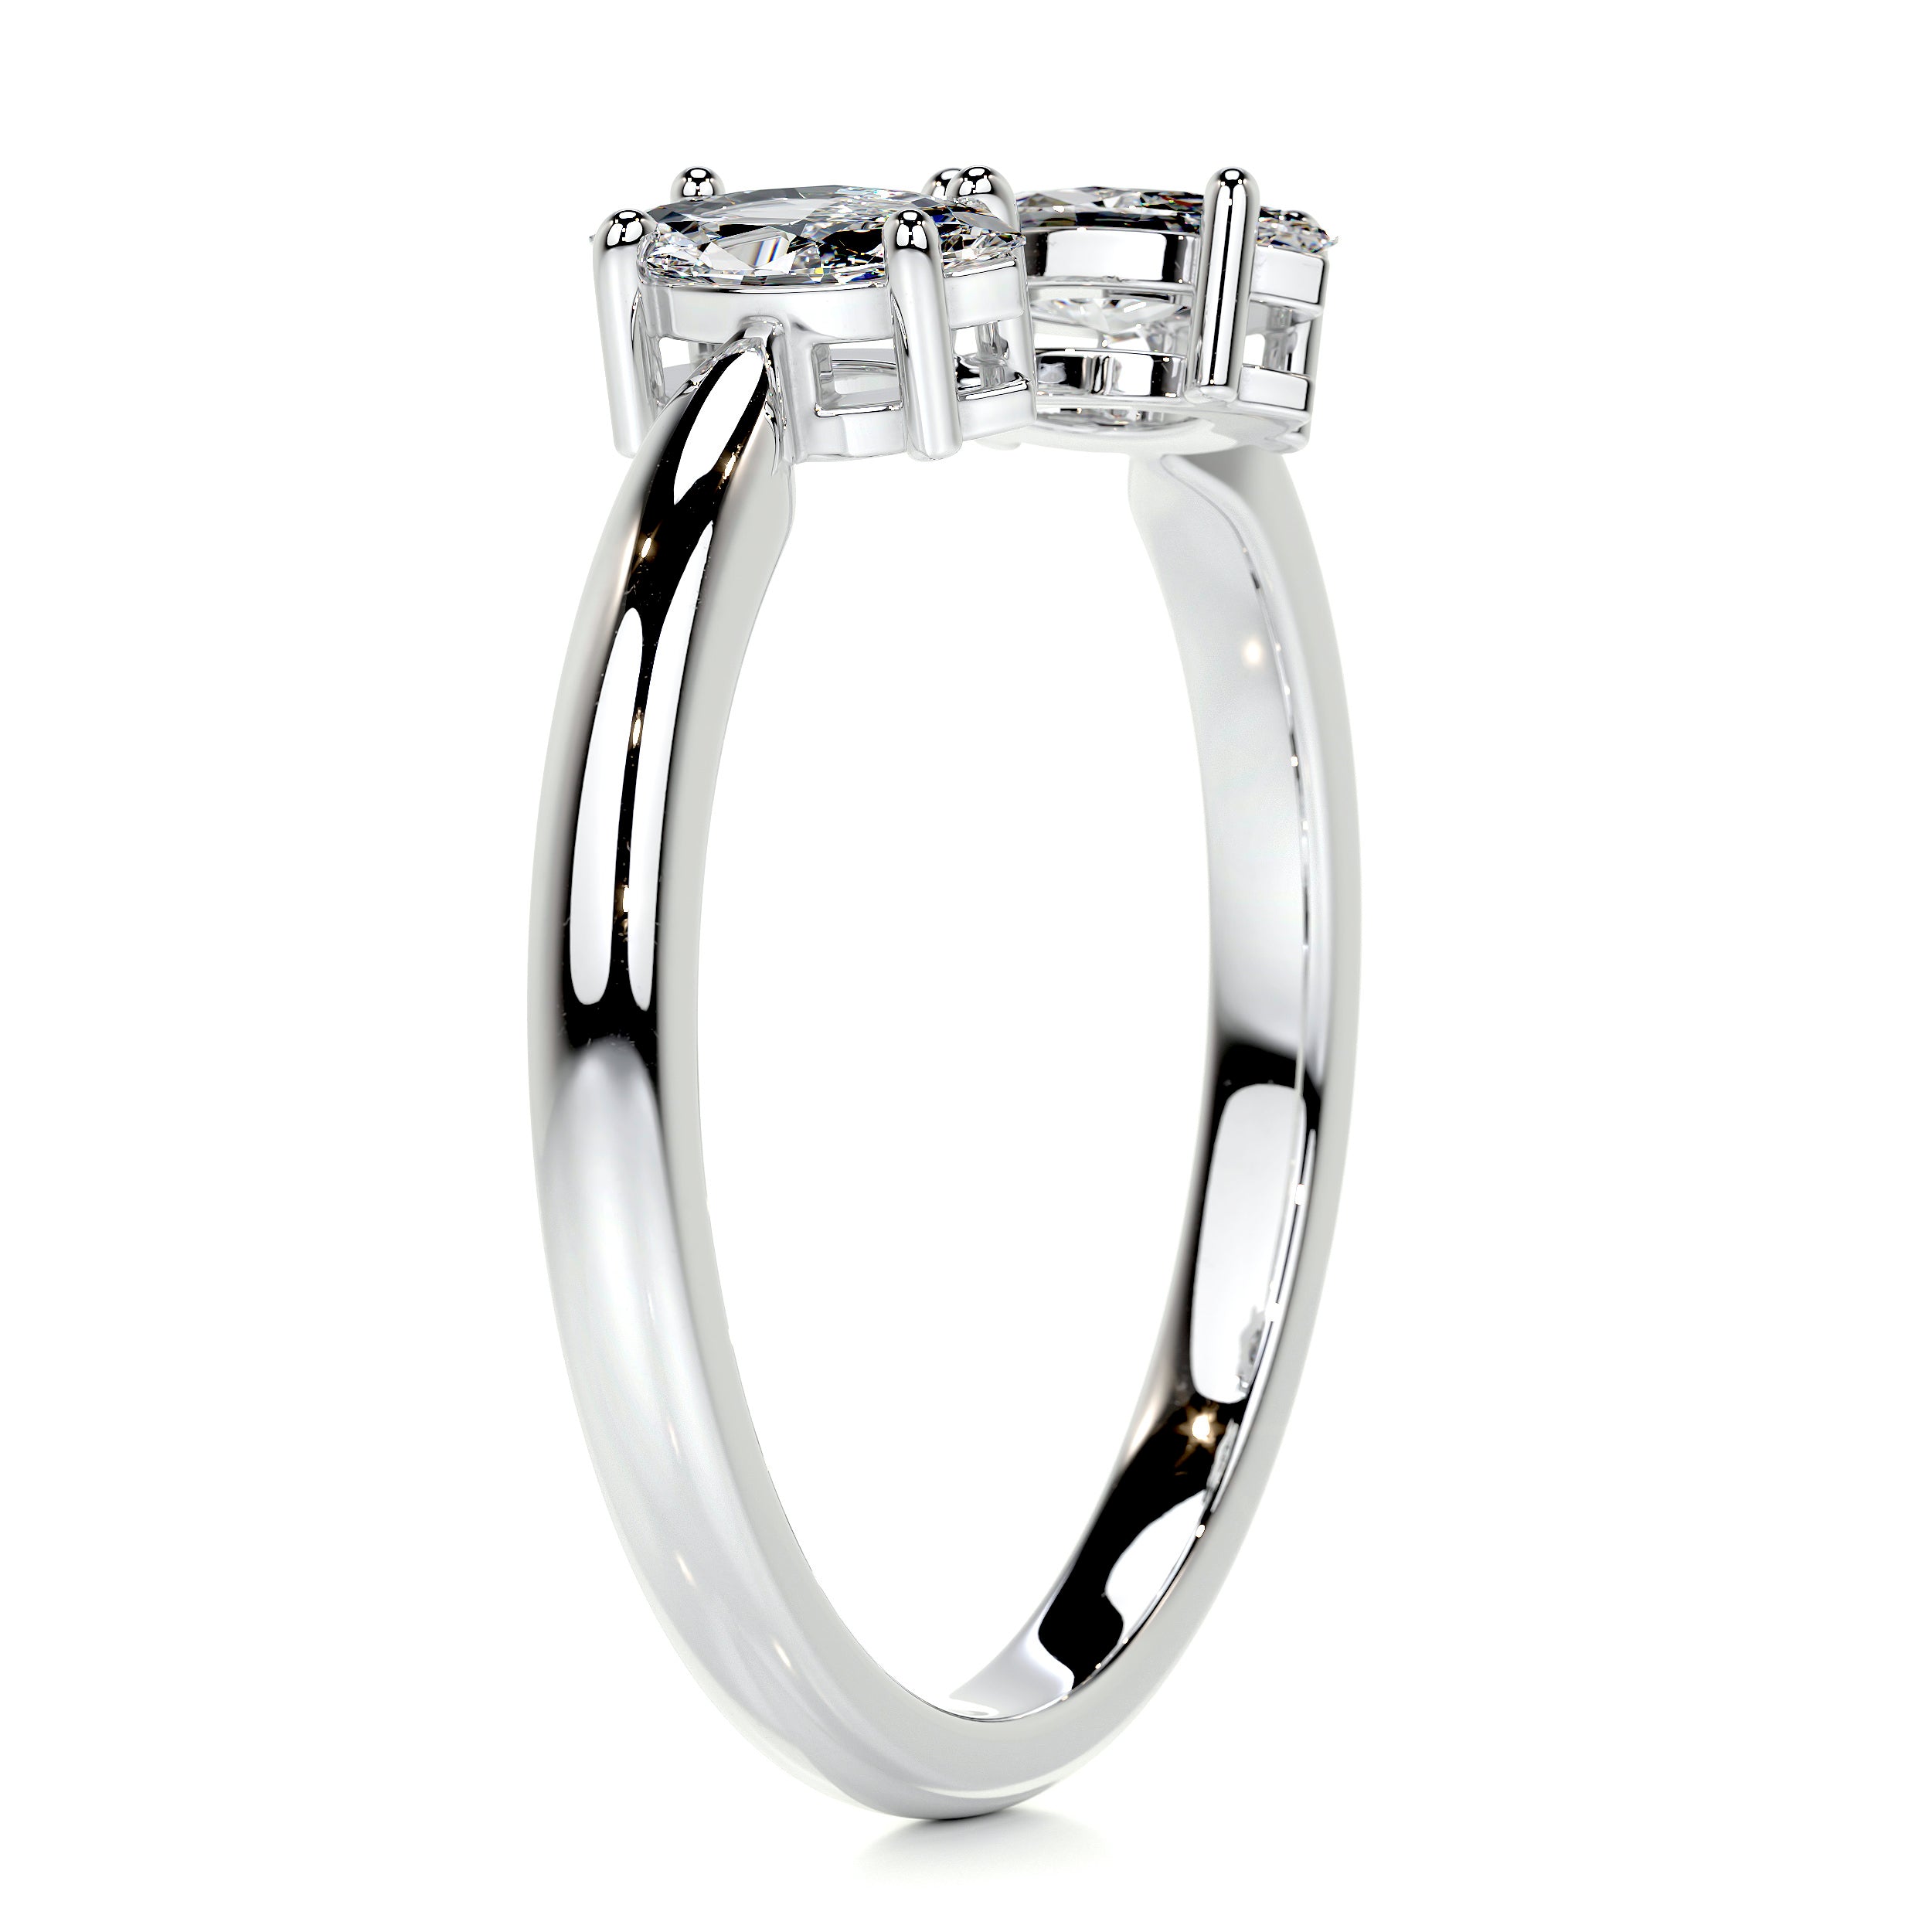 Celine Fashion Ring   (0.36 Carat) -Platinum